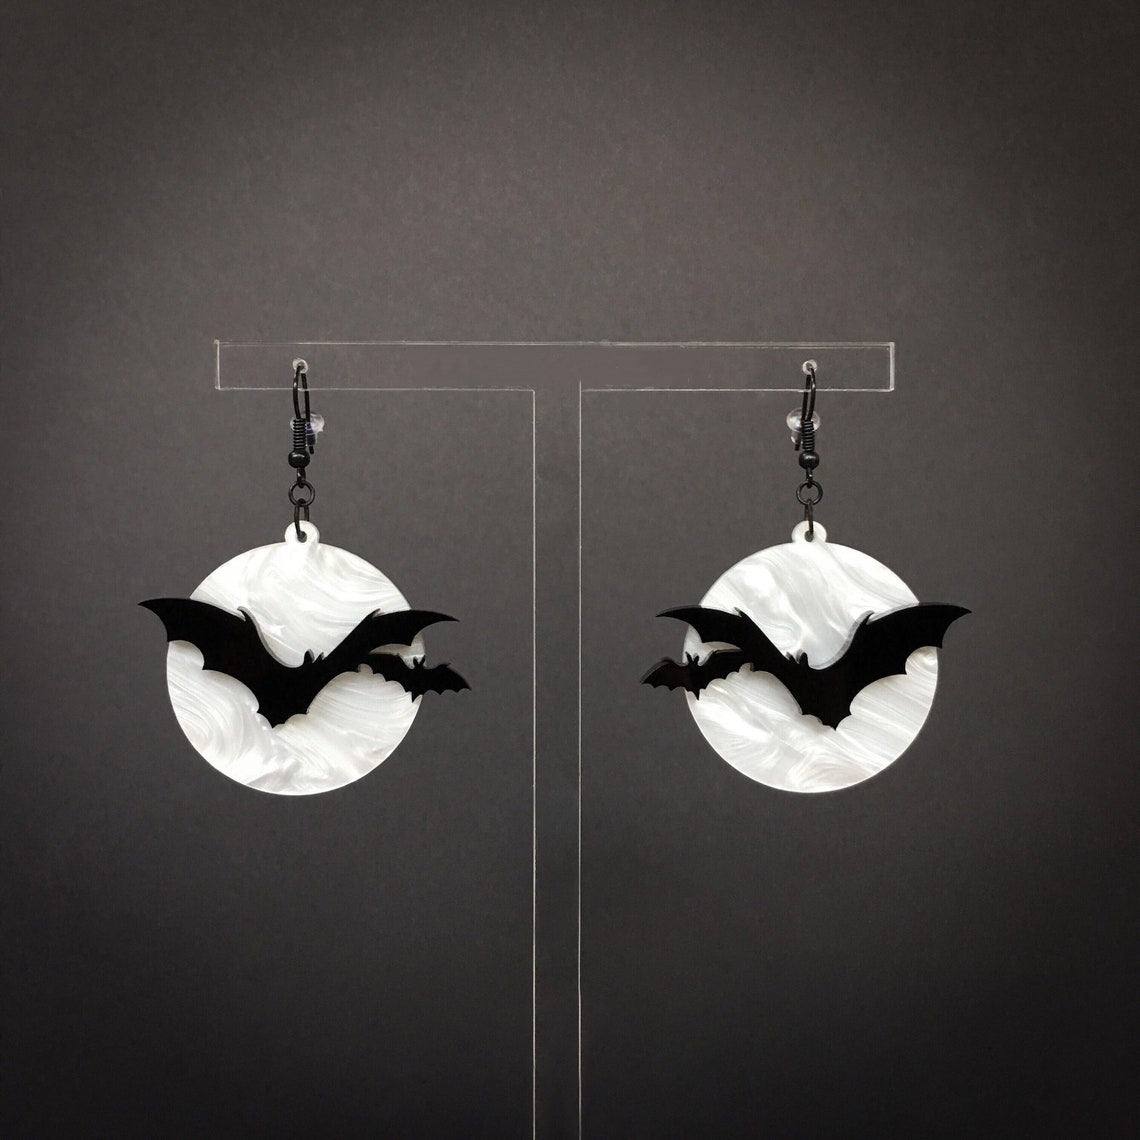 Bat earrings above the moon-canovaniajewelry